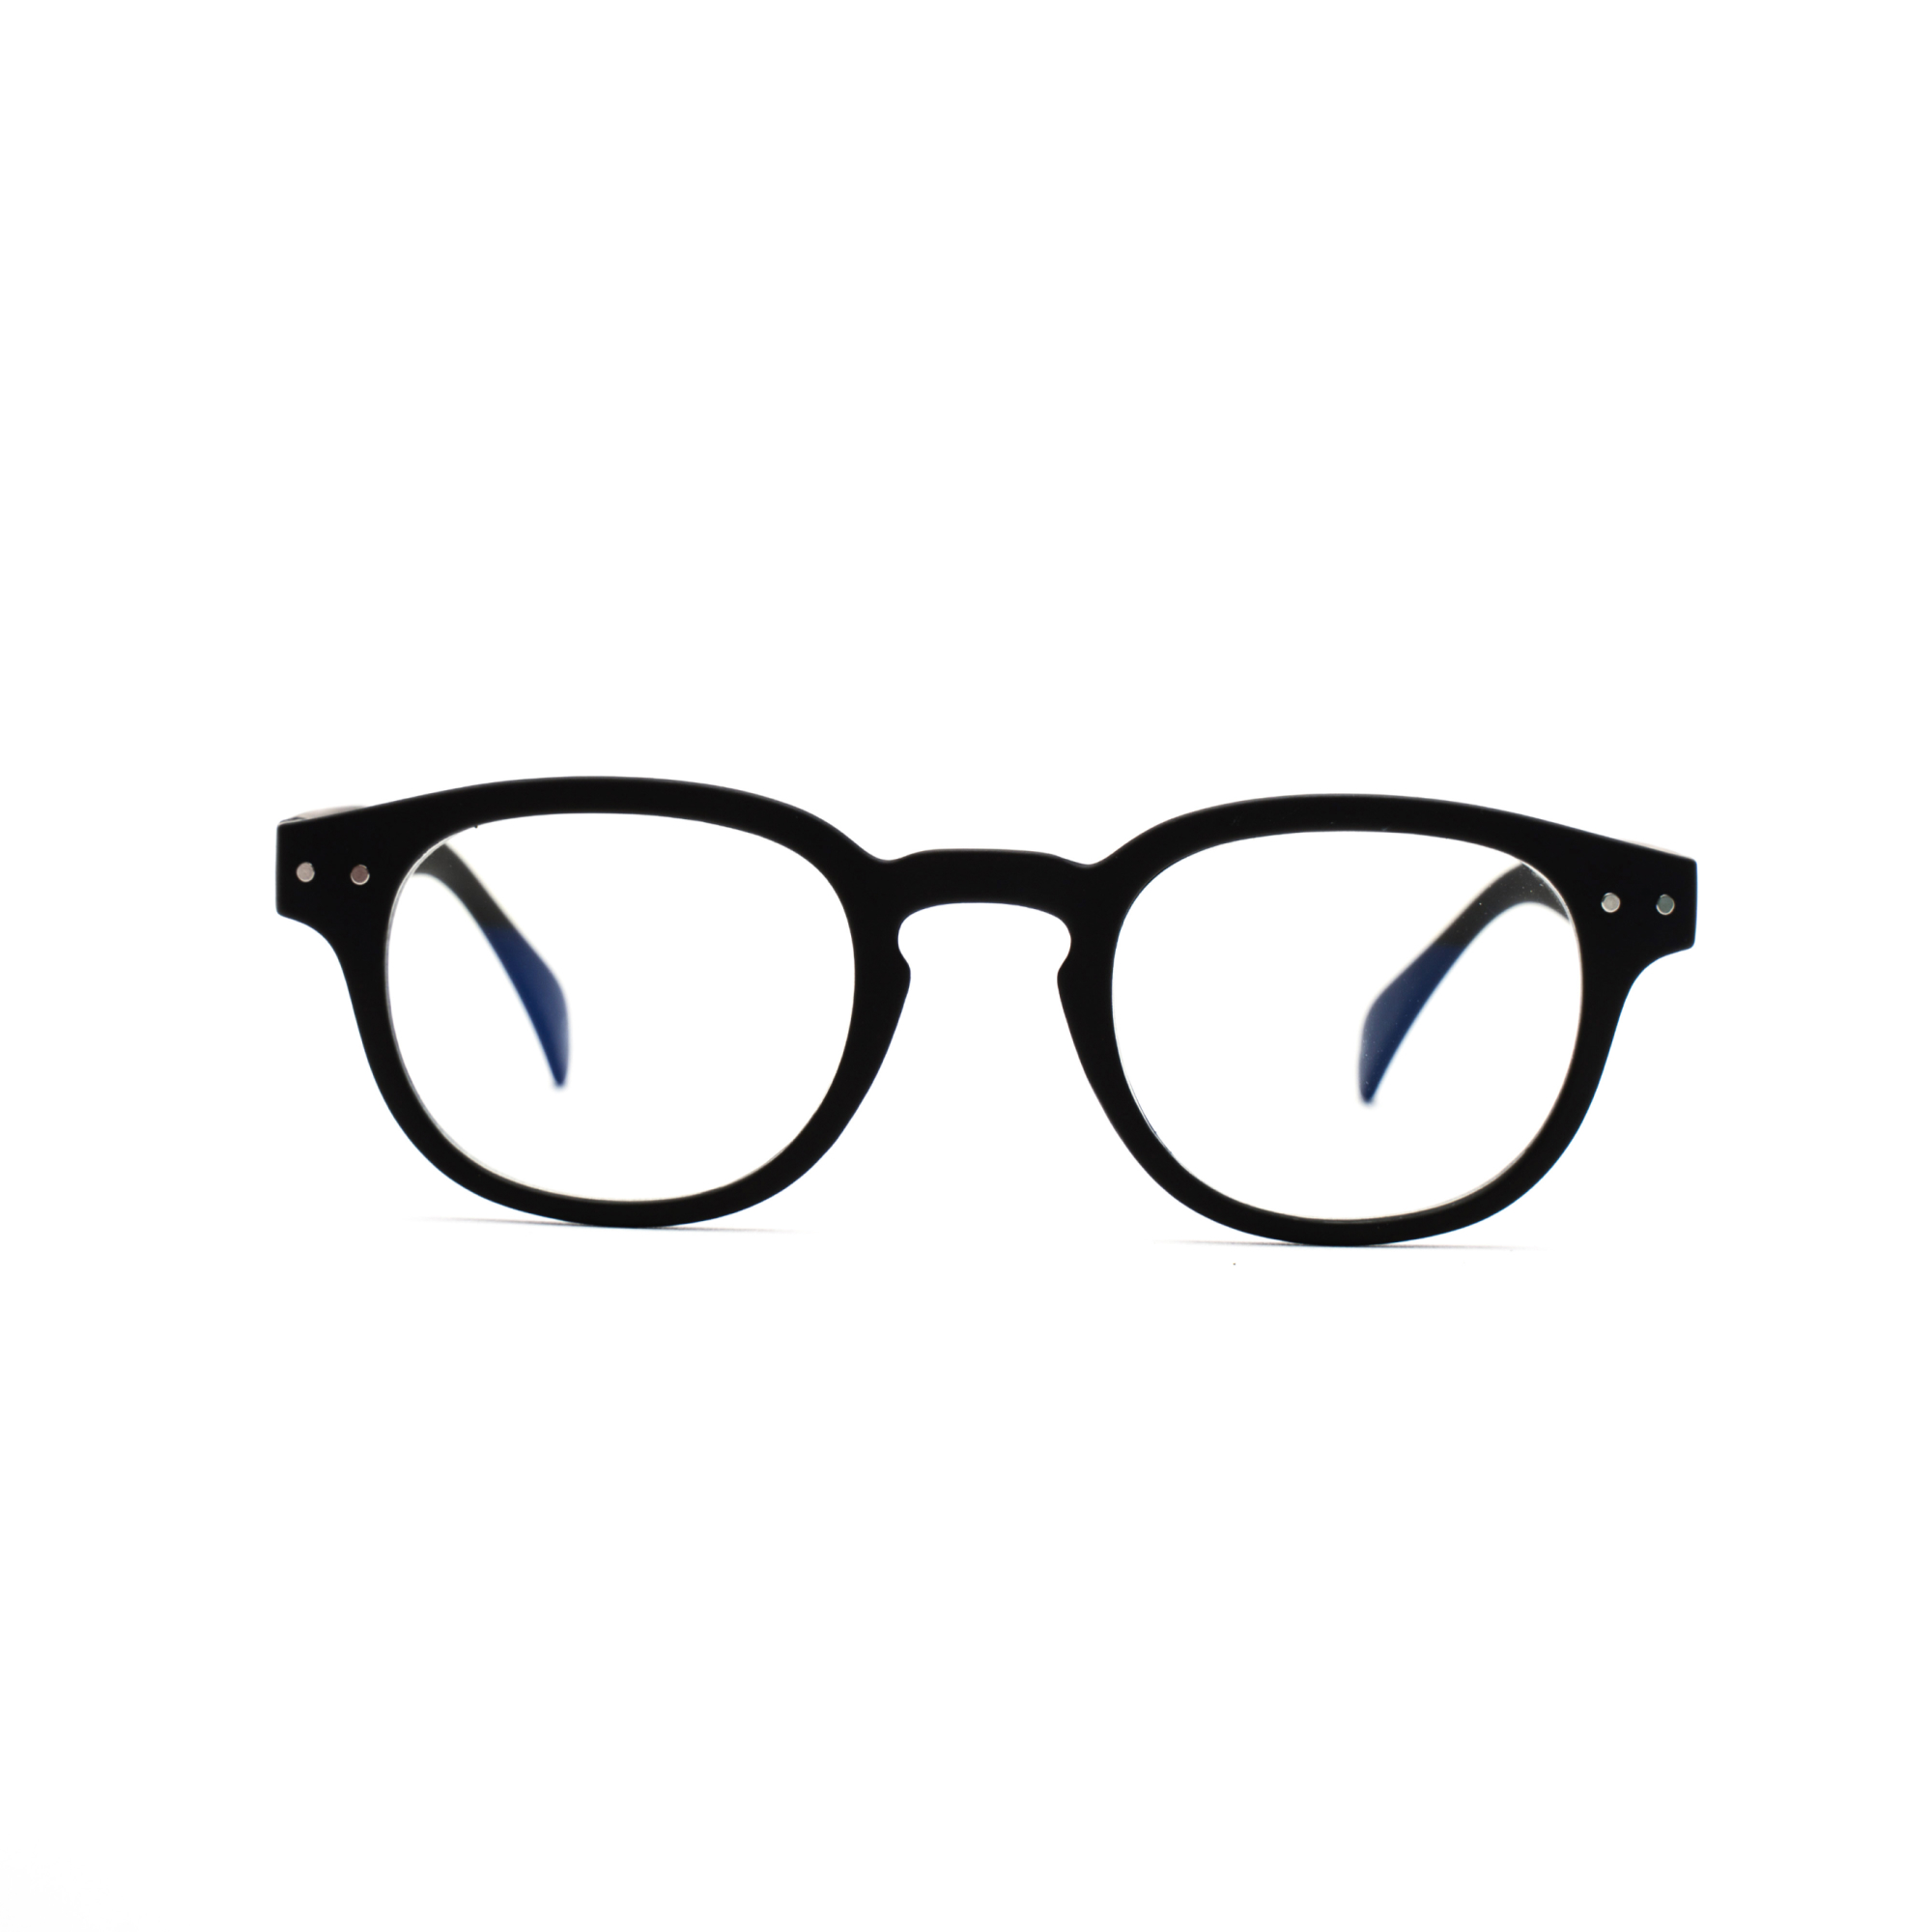 Men's reading glasses – Anton Ultimate m - Black